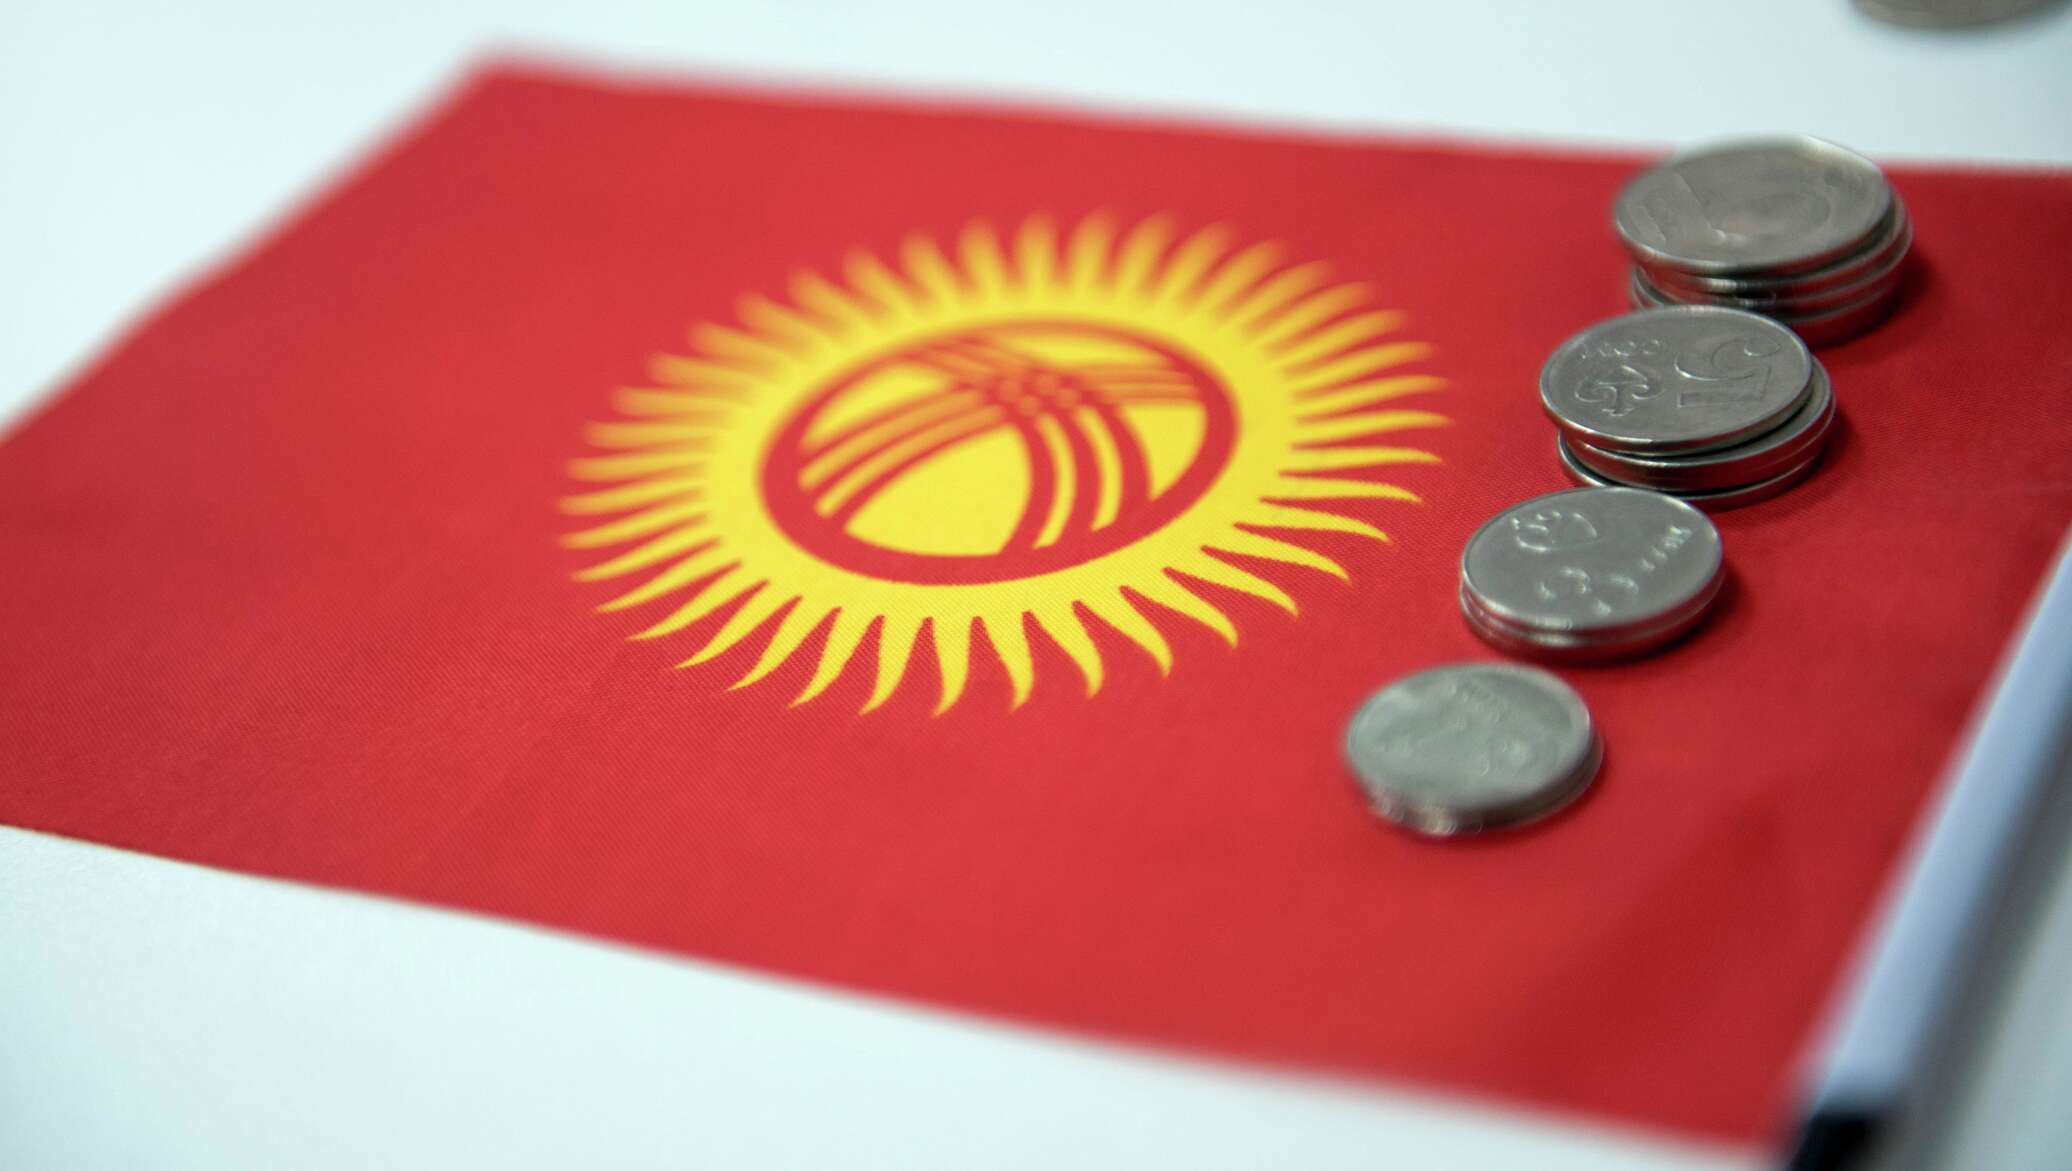 Принят бюджет Кыргызстана на текущий год — президент подписал документ